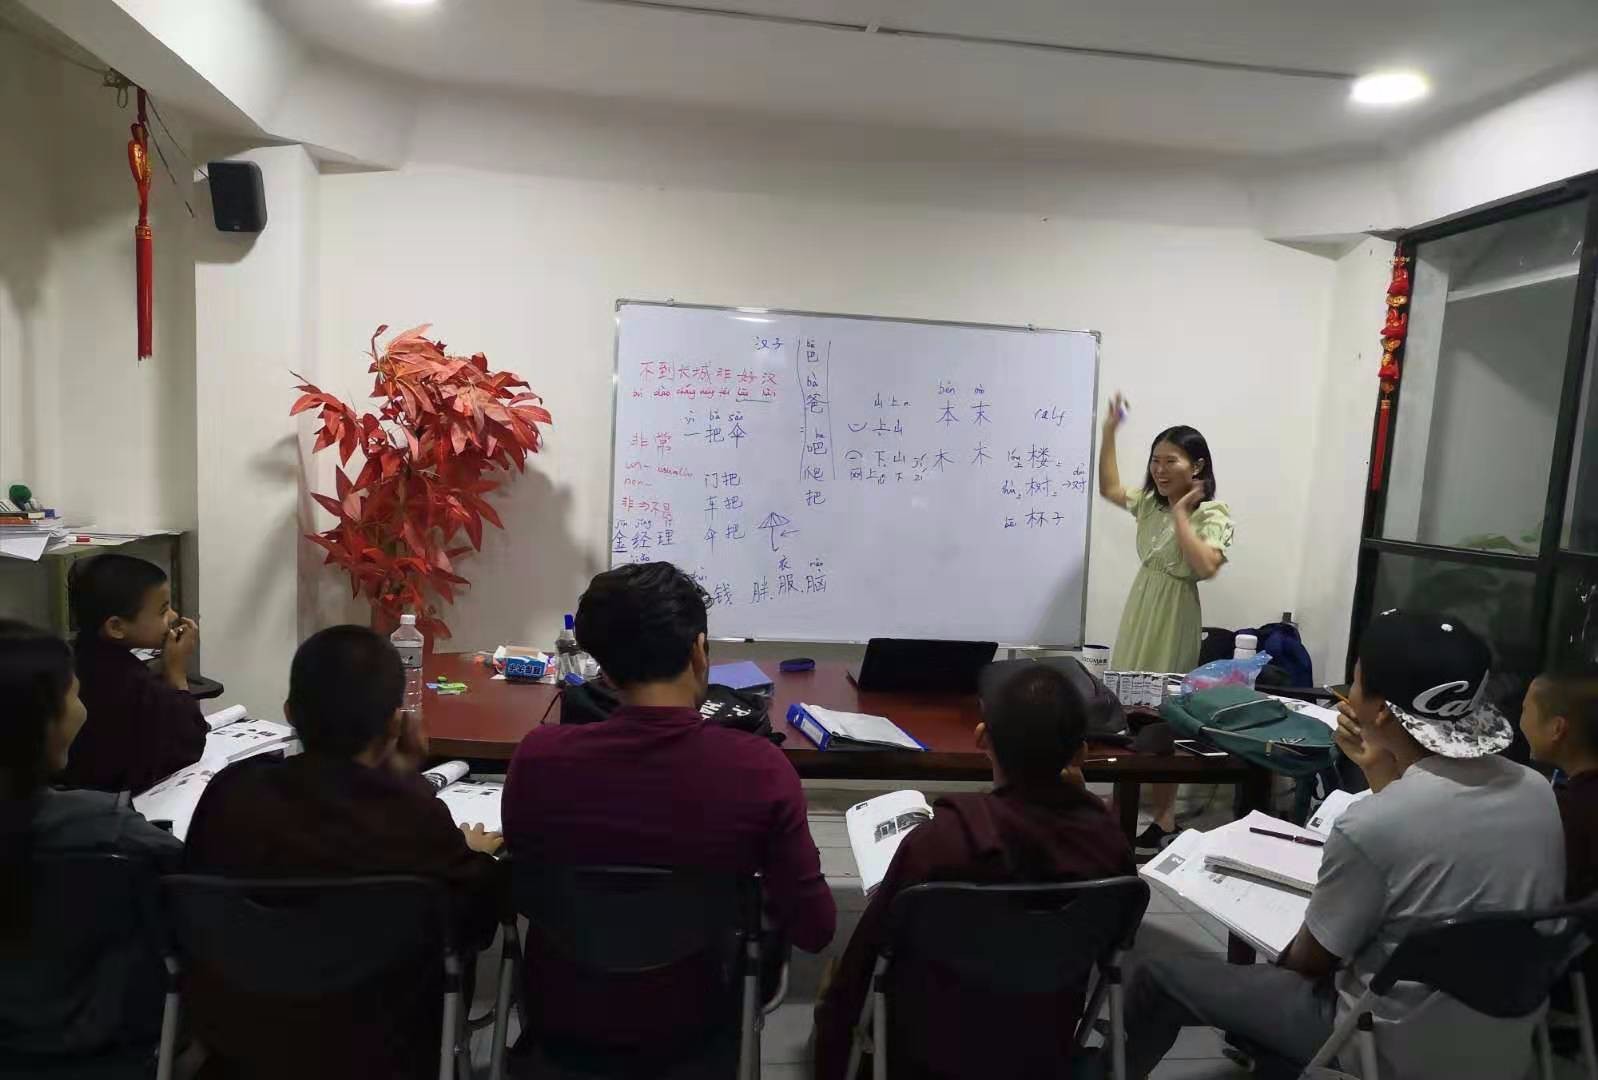 BSC : Basic Spoken Chinese course 零基础中文口语课程简介